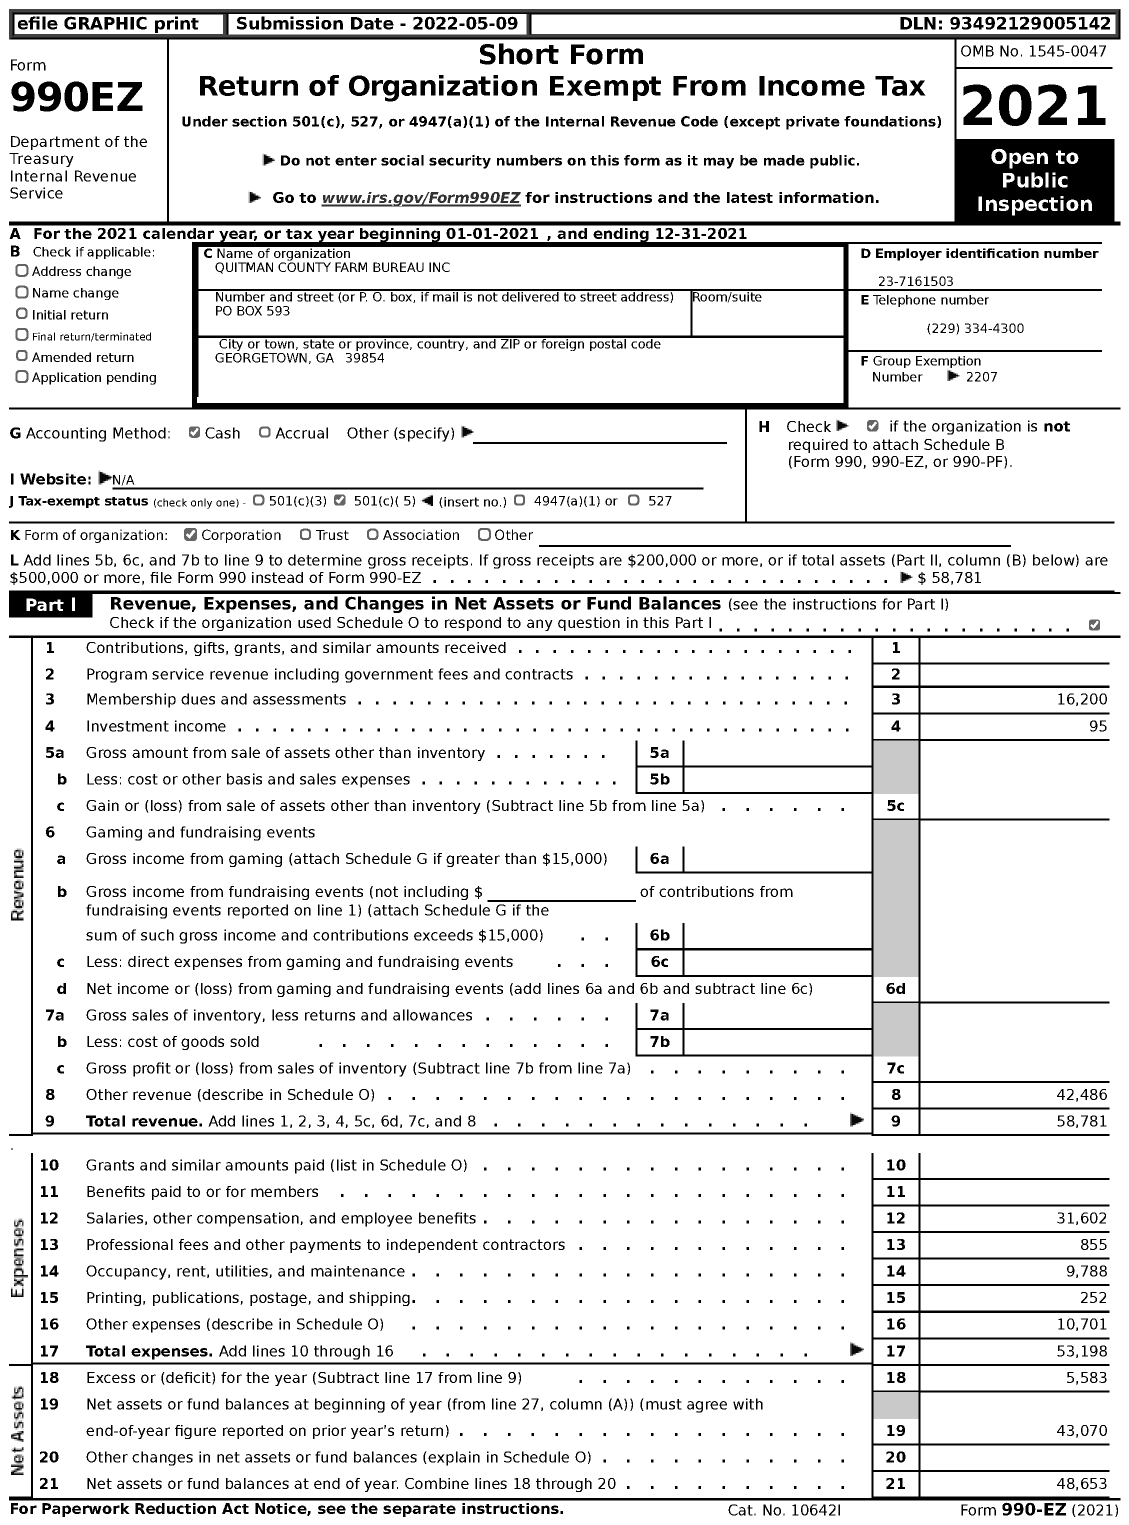 Image of first page of 2021 Form 990EZ for Georgia Farm Bureau Federation - Quitman County Farm Bureau